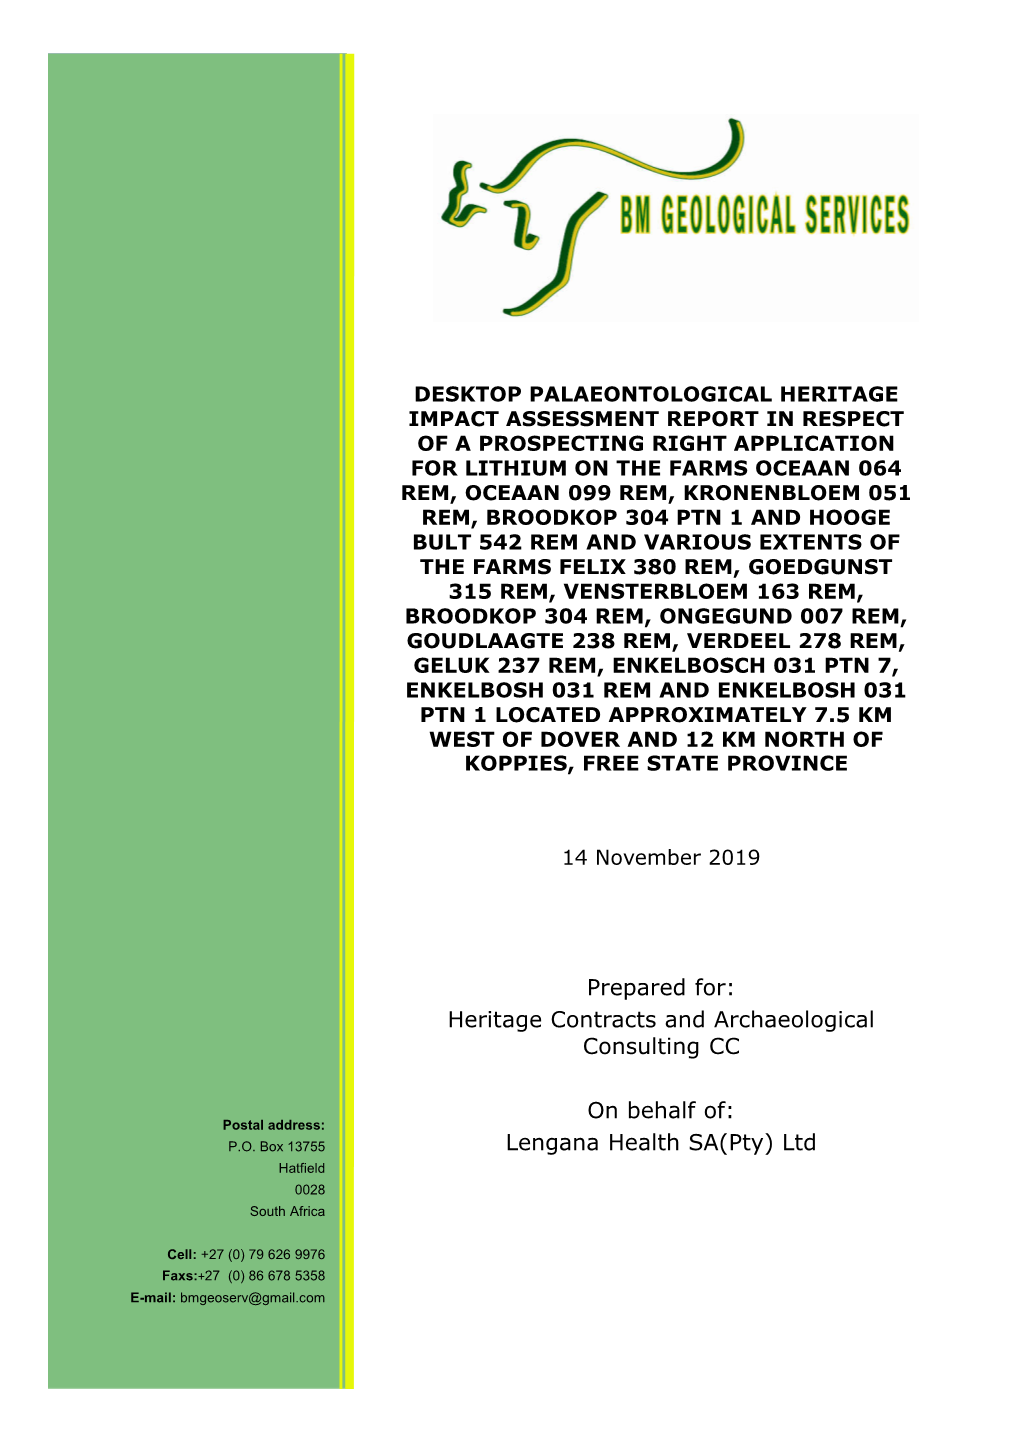 Lengana Health SA(Pty) Ltd Hatfield 0028 South Africa